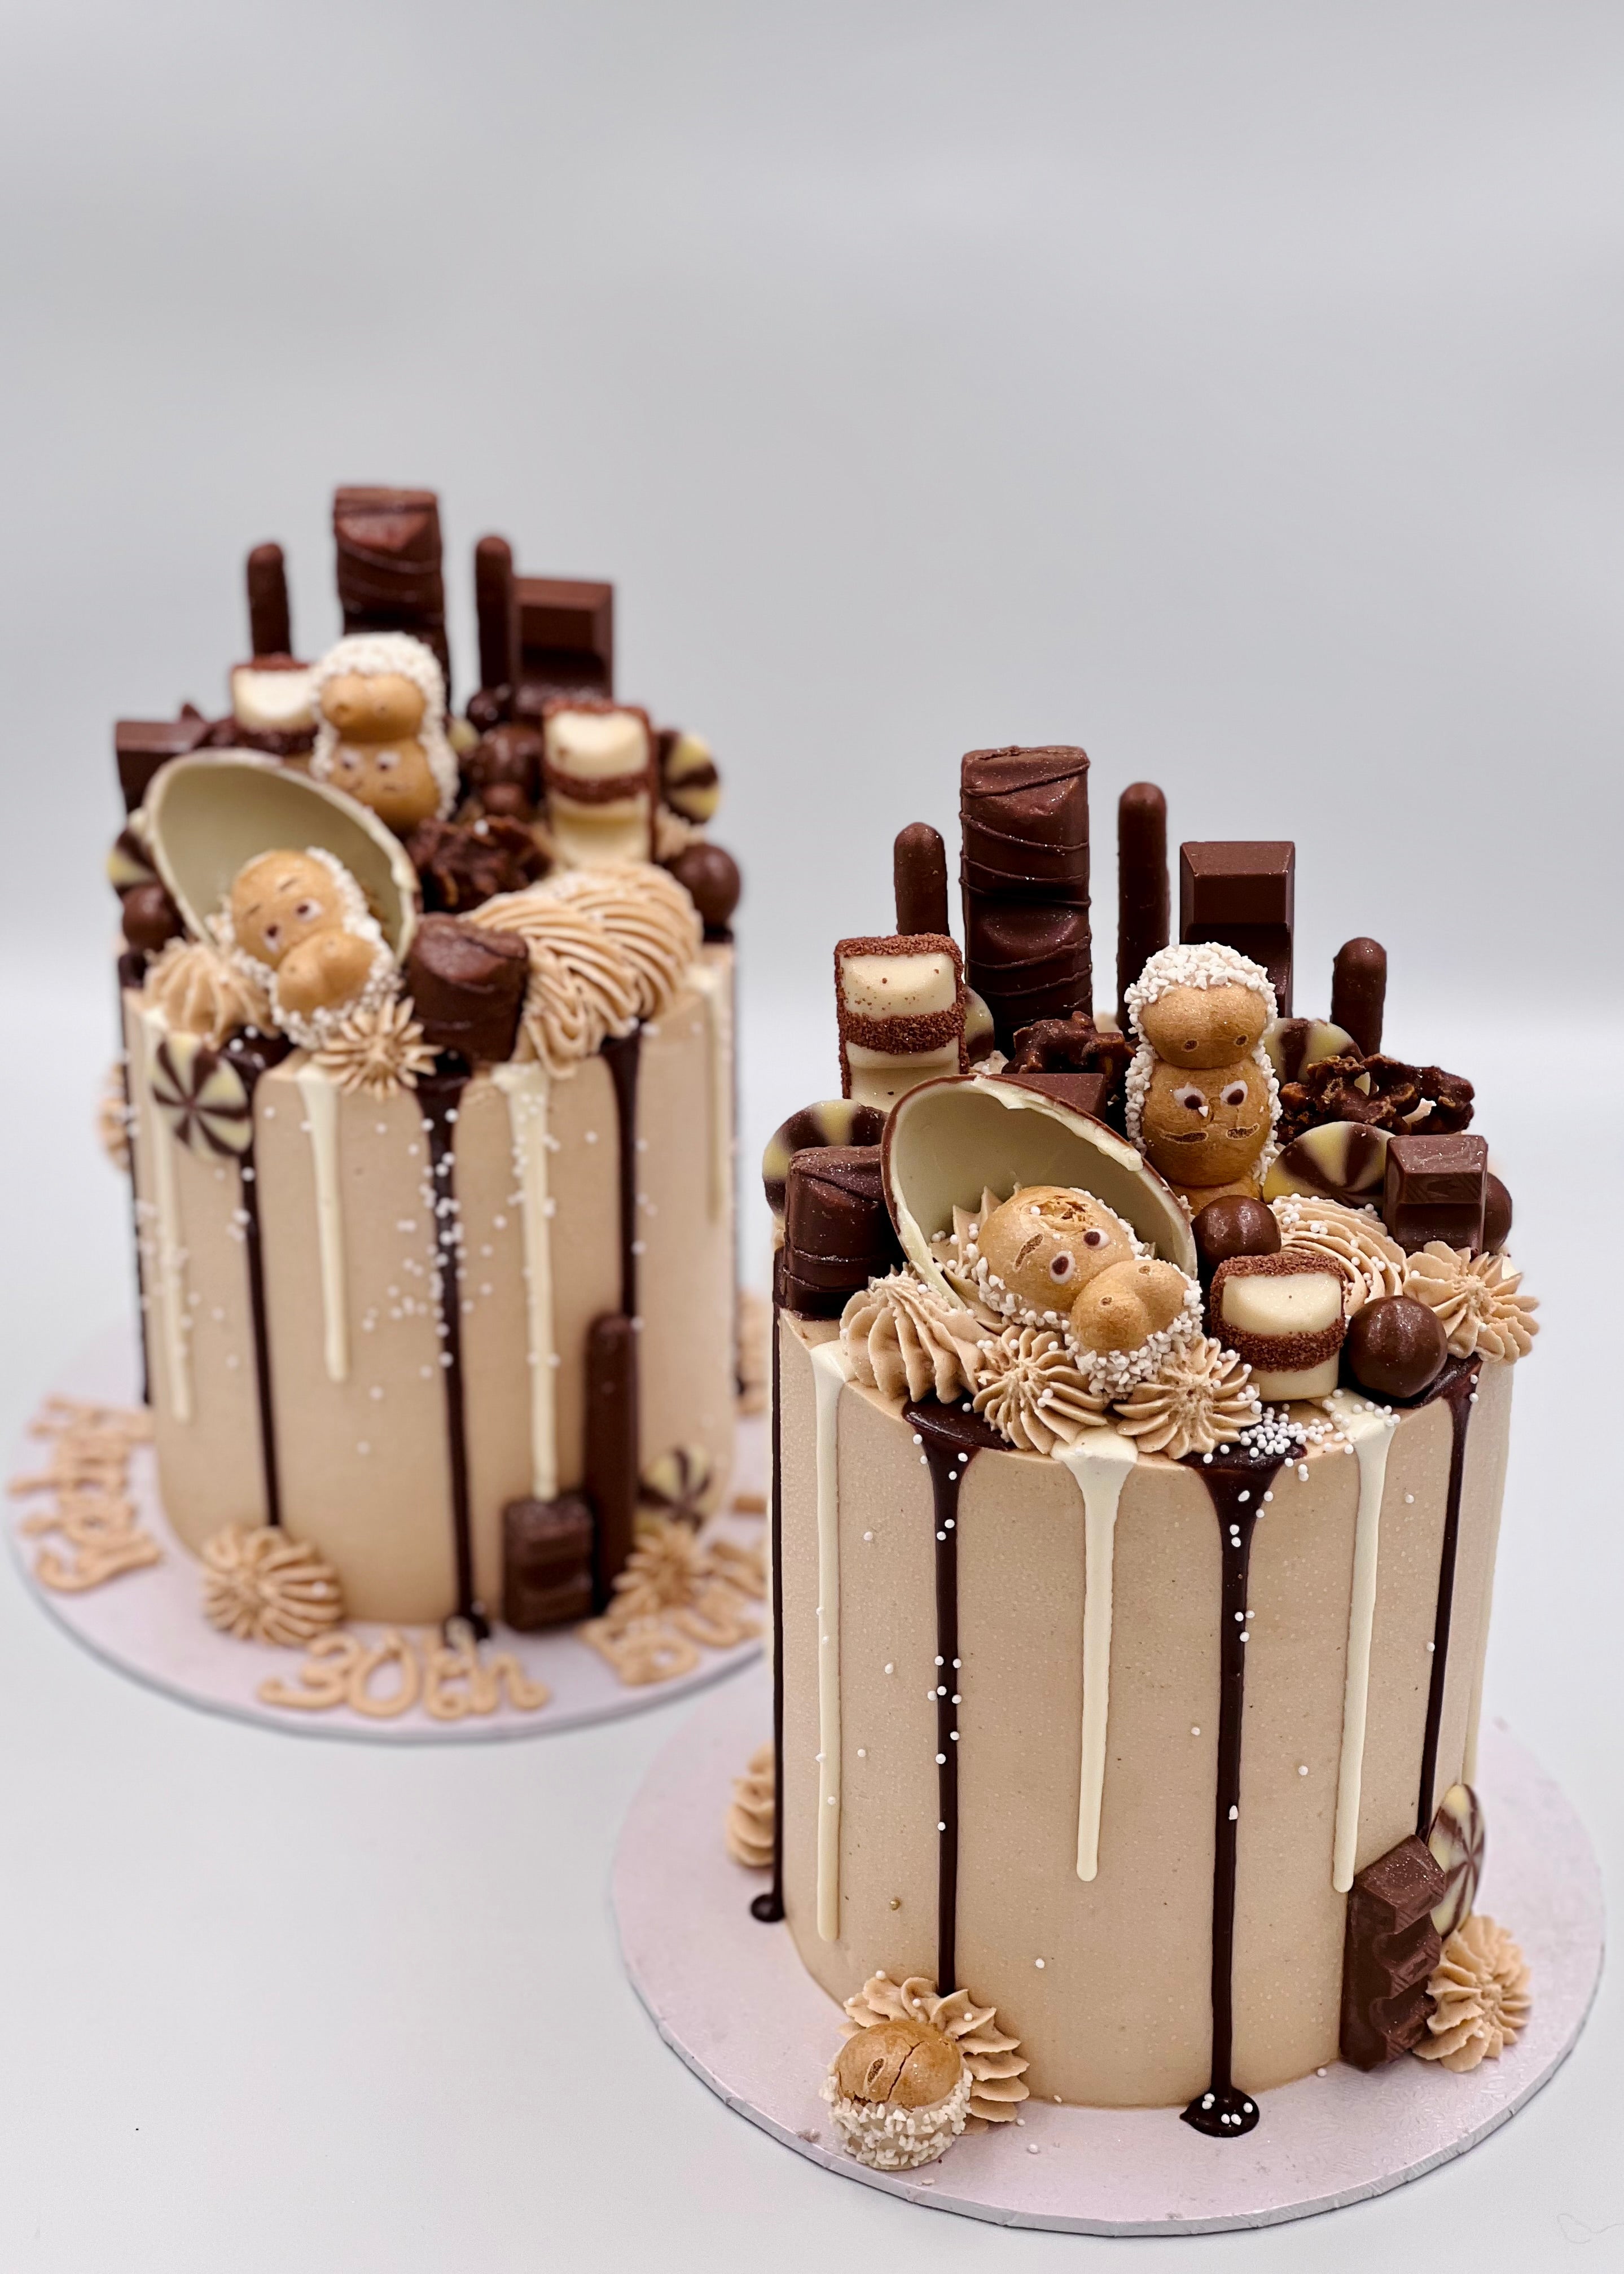 Cake Kinder Surprise Cake Sweets June Stock Photo 1220924653 | Shutterstock